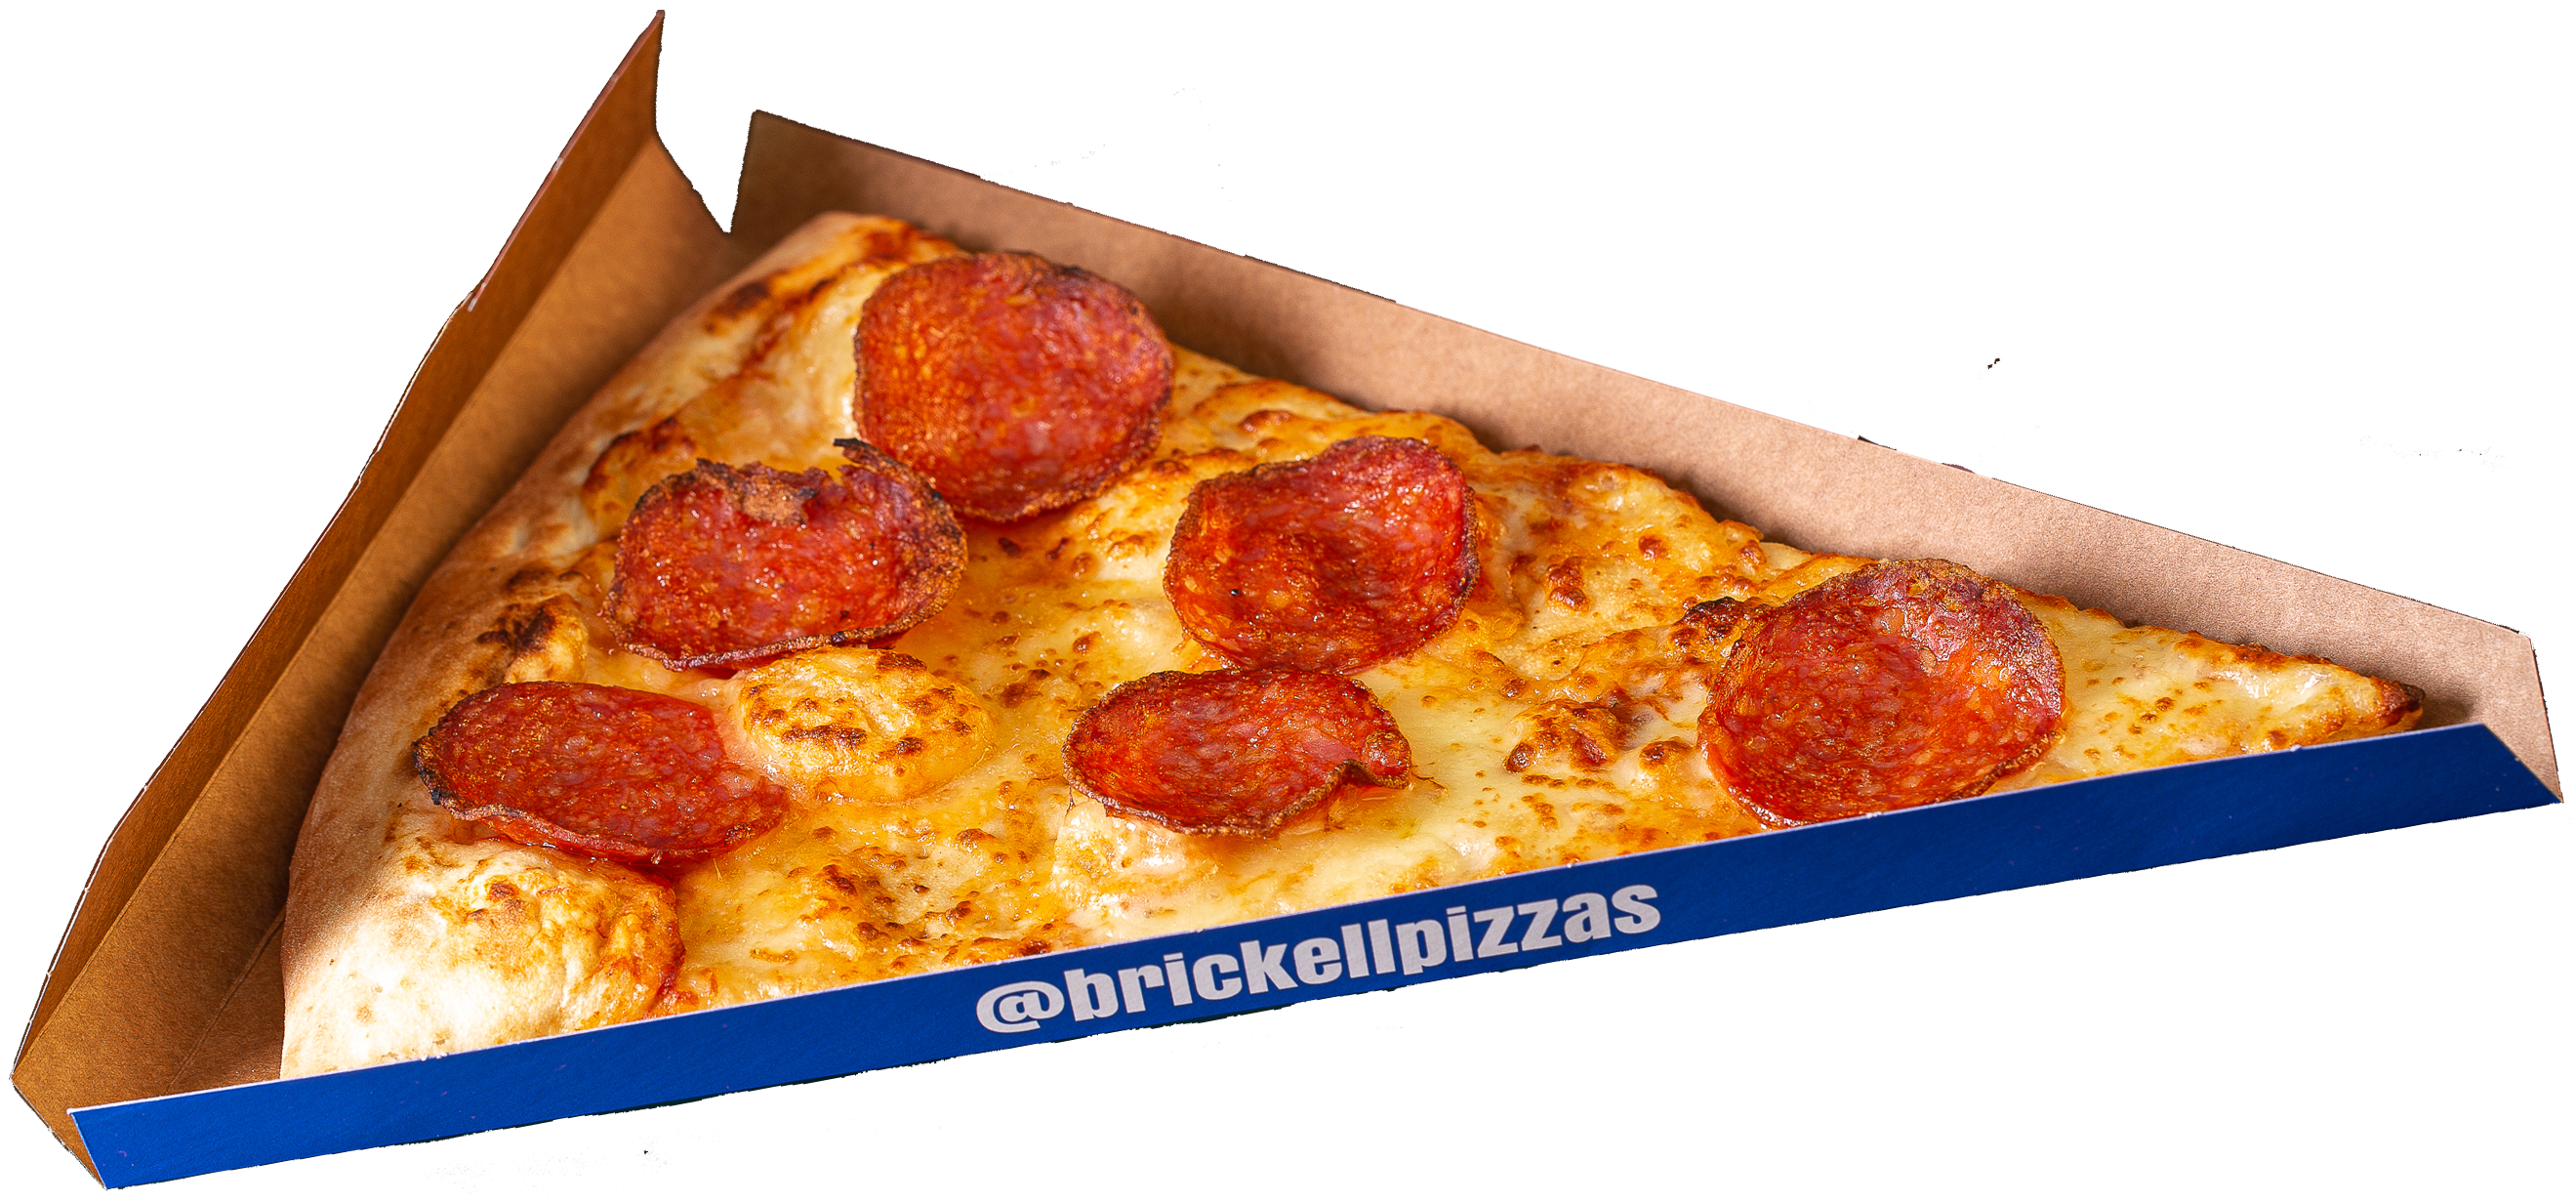 Brickell Pizzas